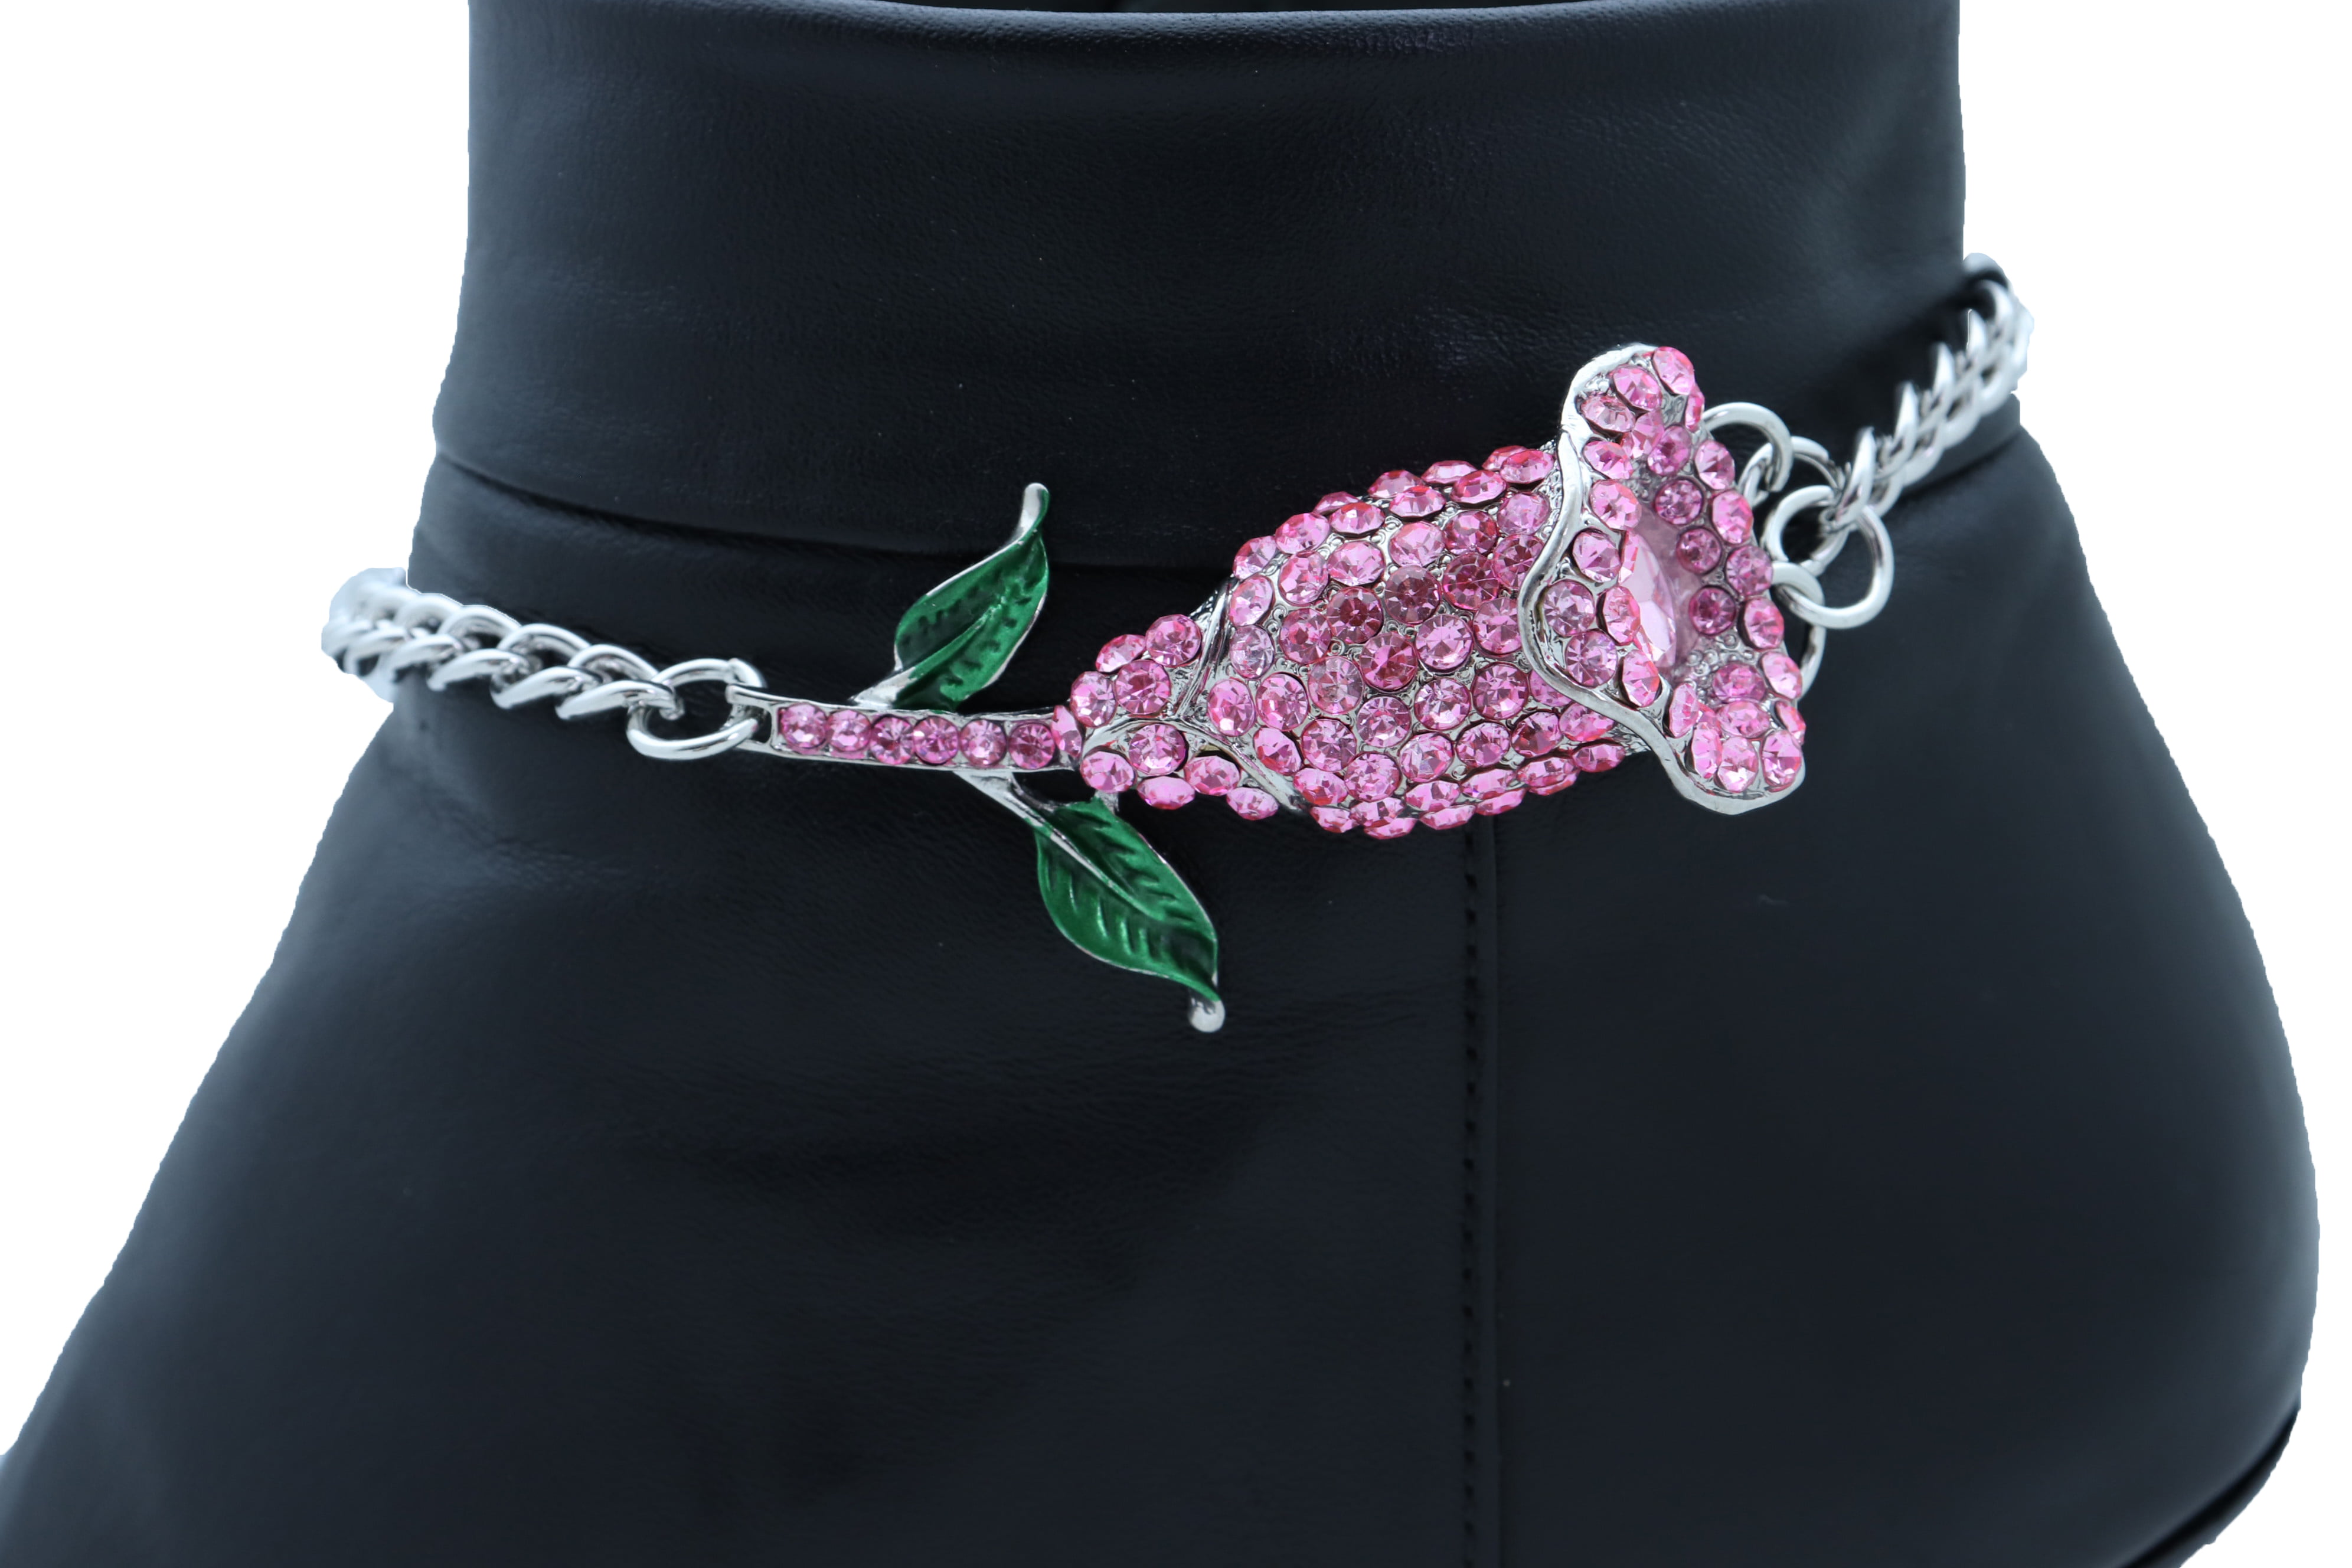 Cute Women Silver Metal Chain Boot Bracelet Shoe Peace Sign Bling Charm Jewelry 